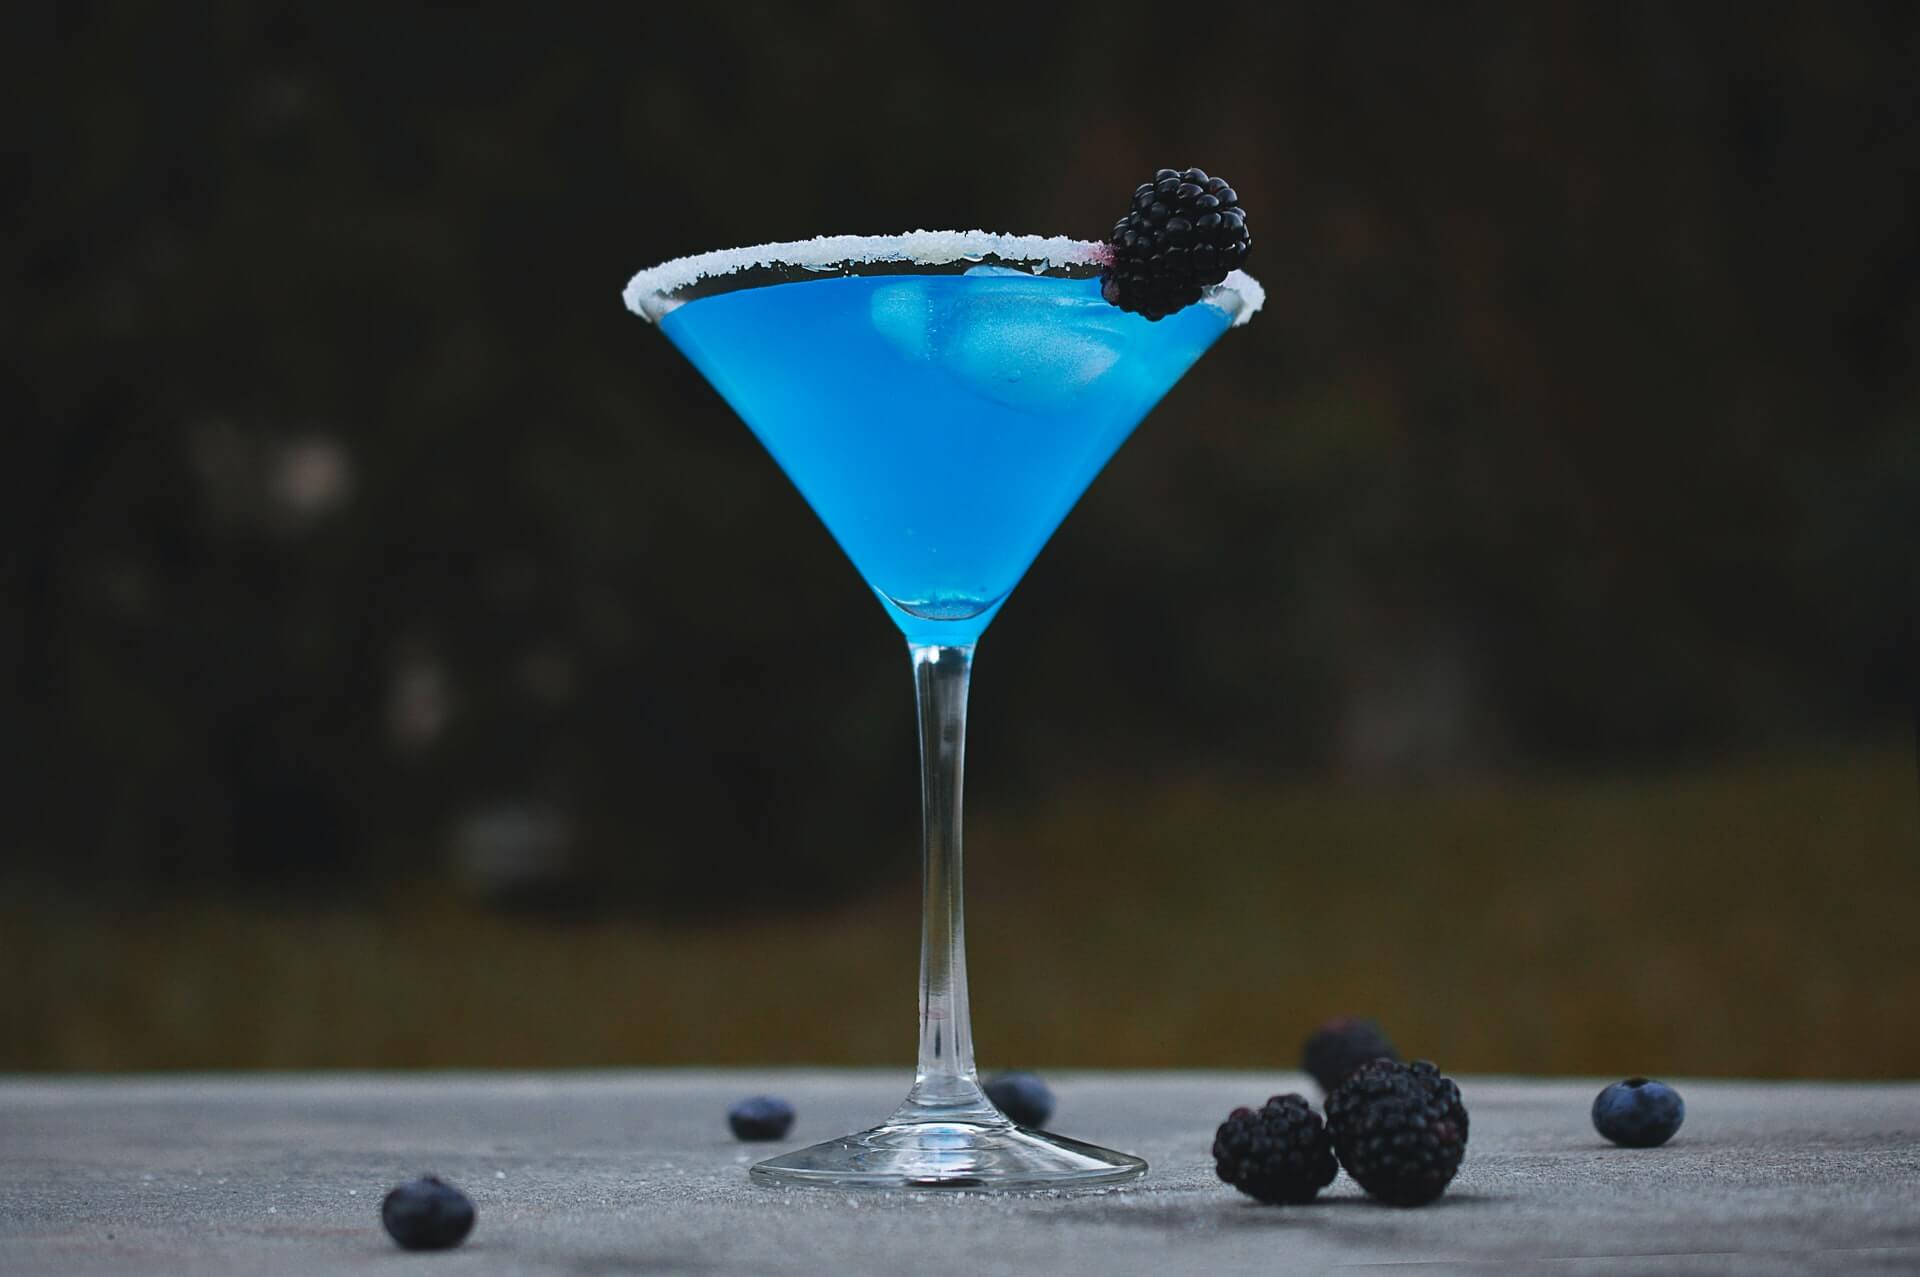 https://recipes.net/wp-content/uploads/2021/10/blue-cocktail-drinks.jpg